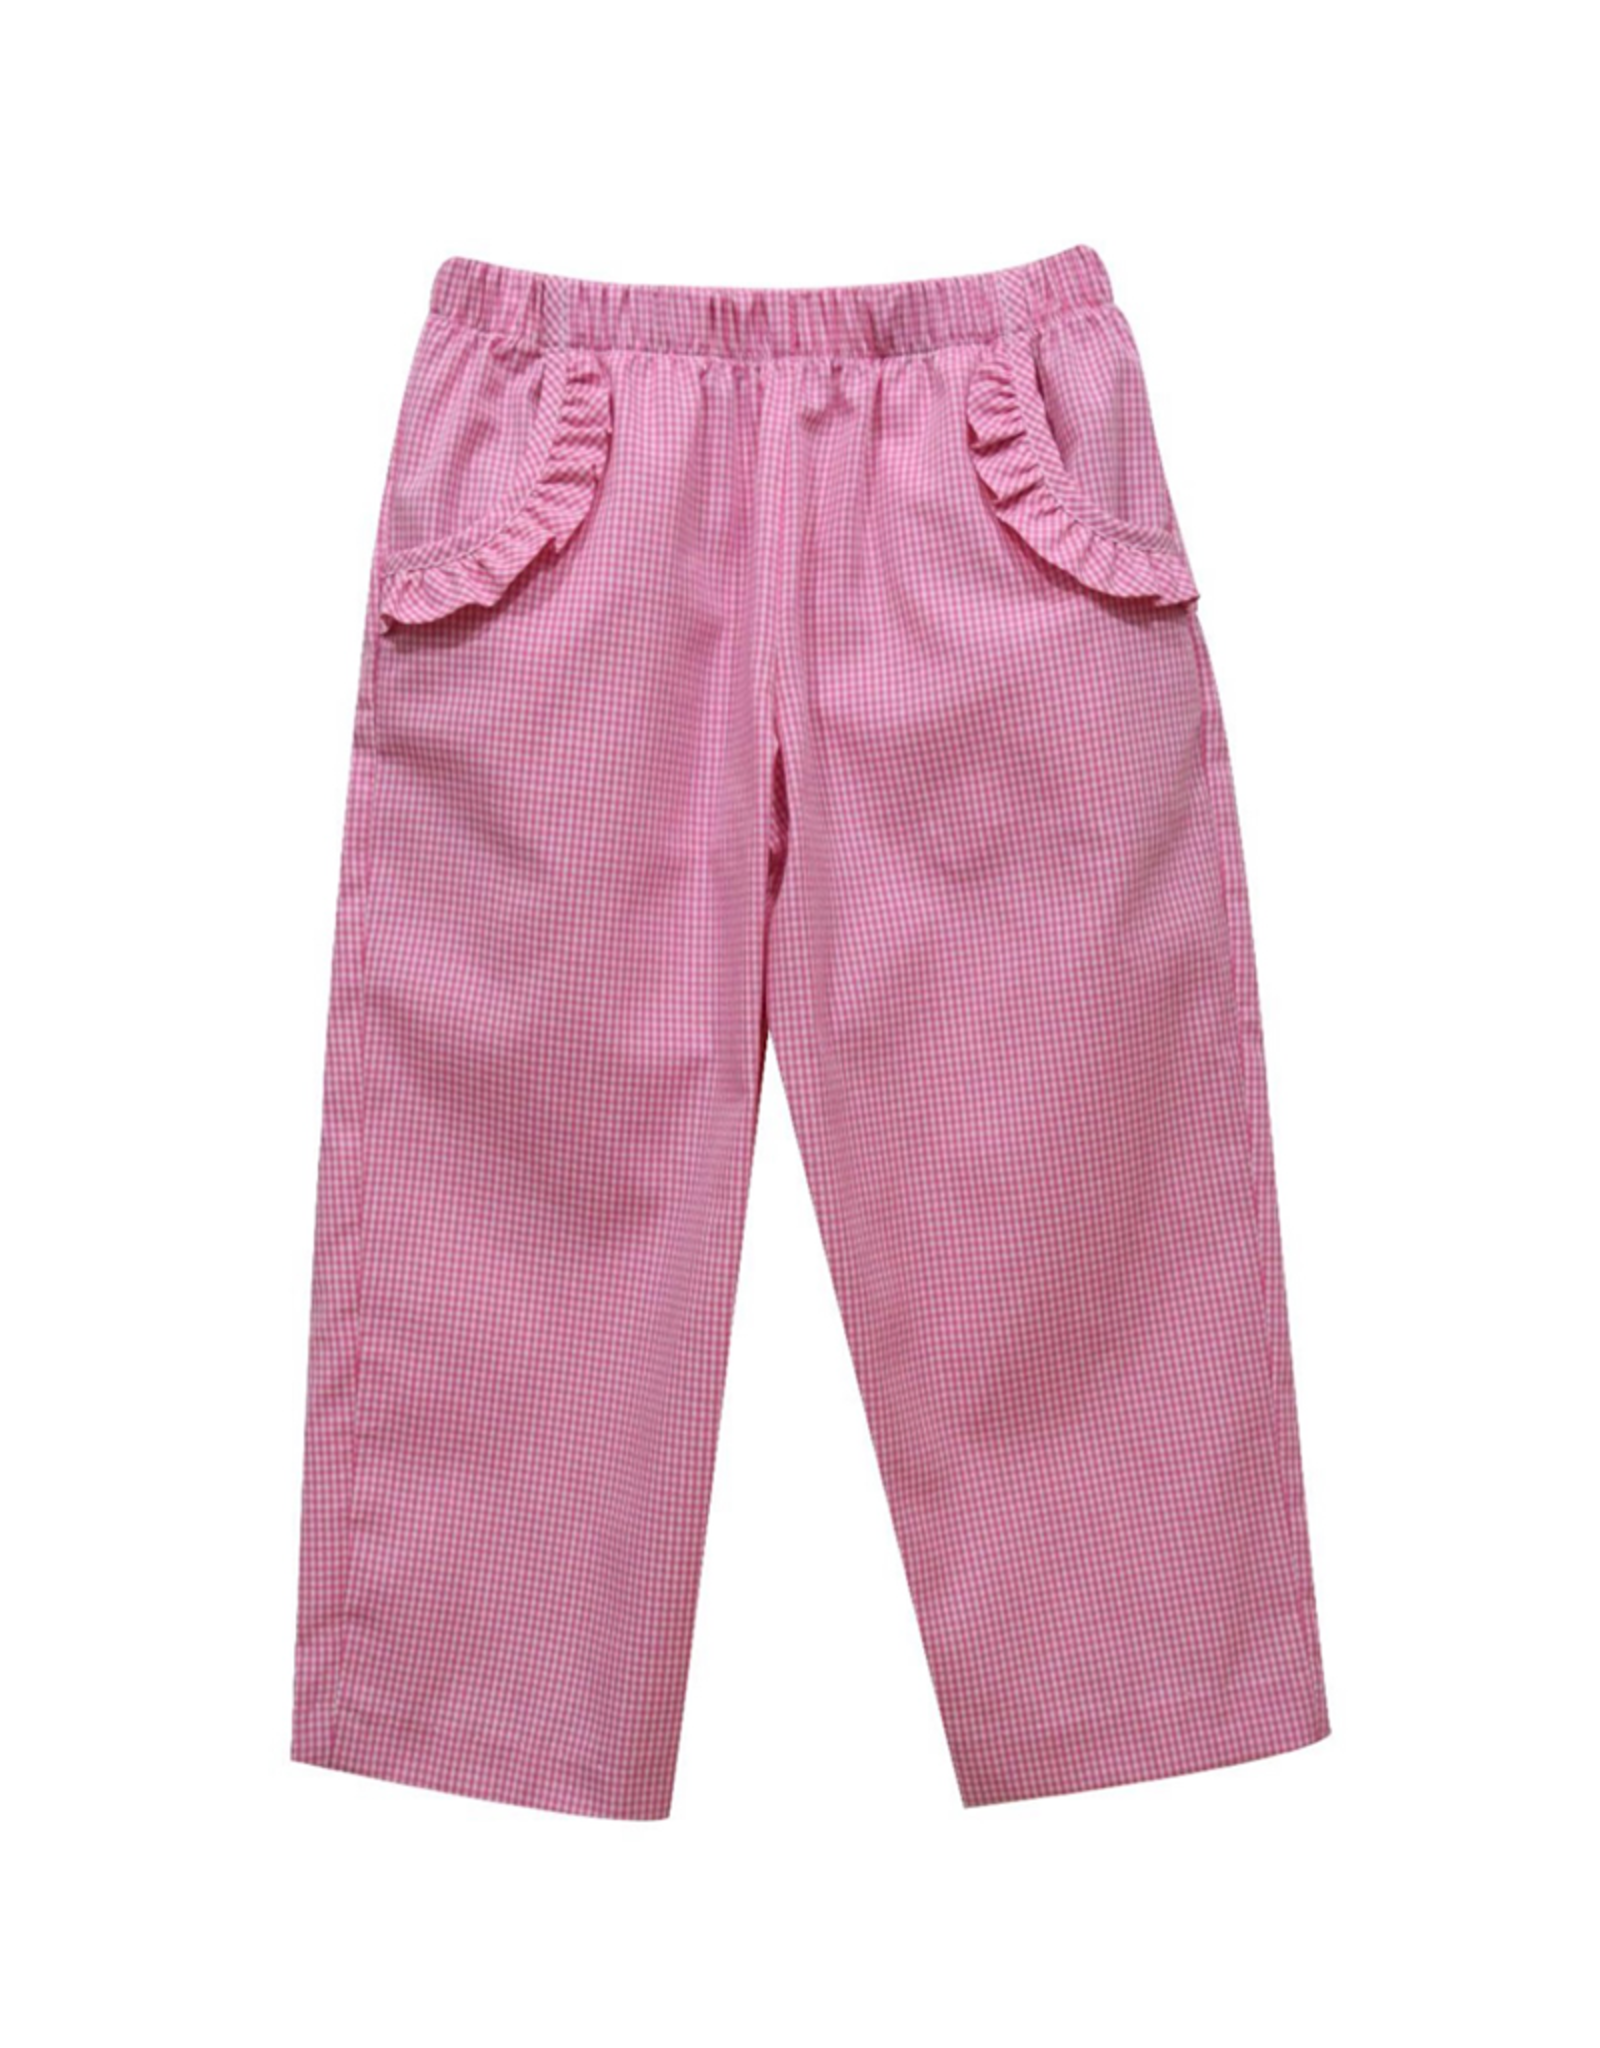 Vive la Fete VFF21 Ruffle Pocket Pant Hot Pink Check